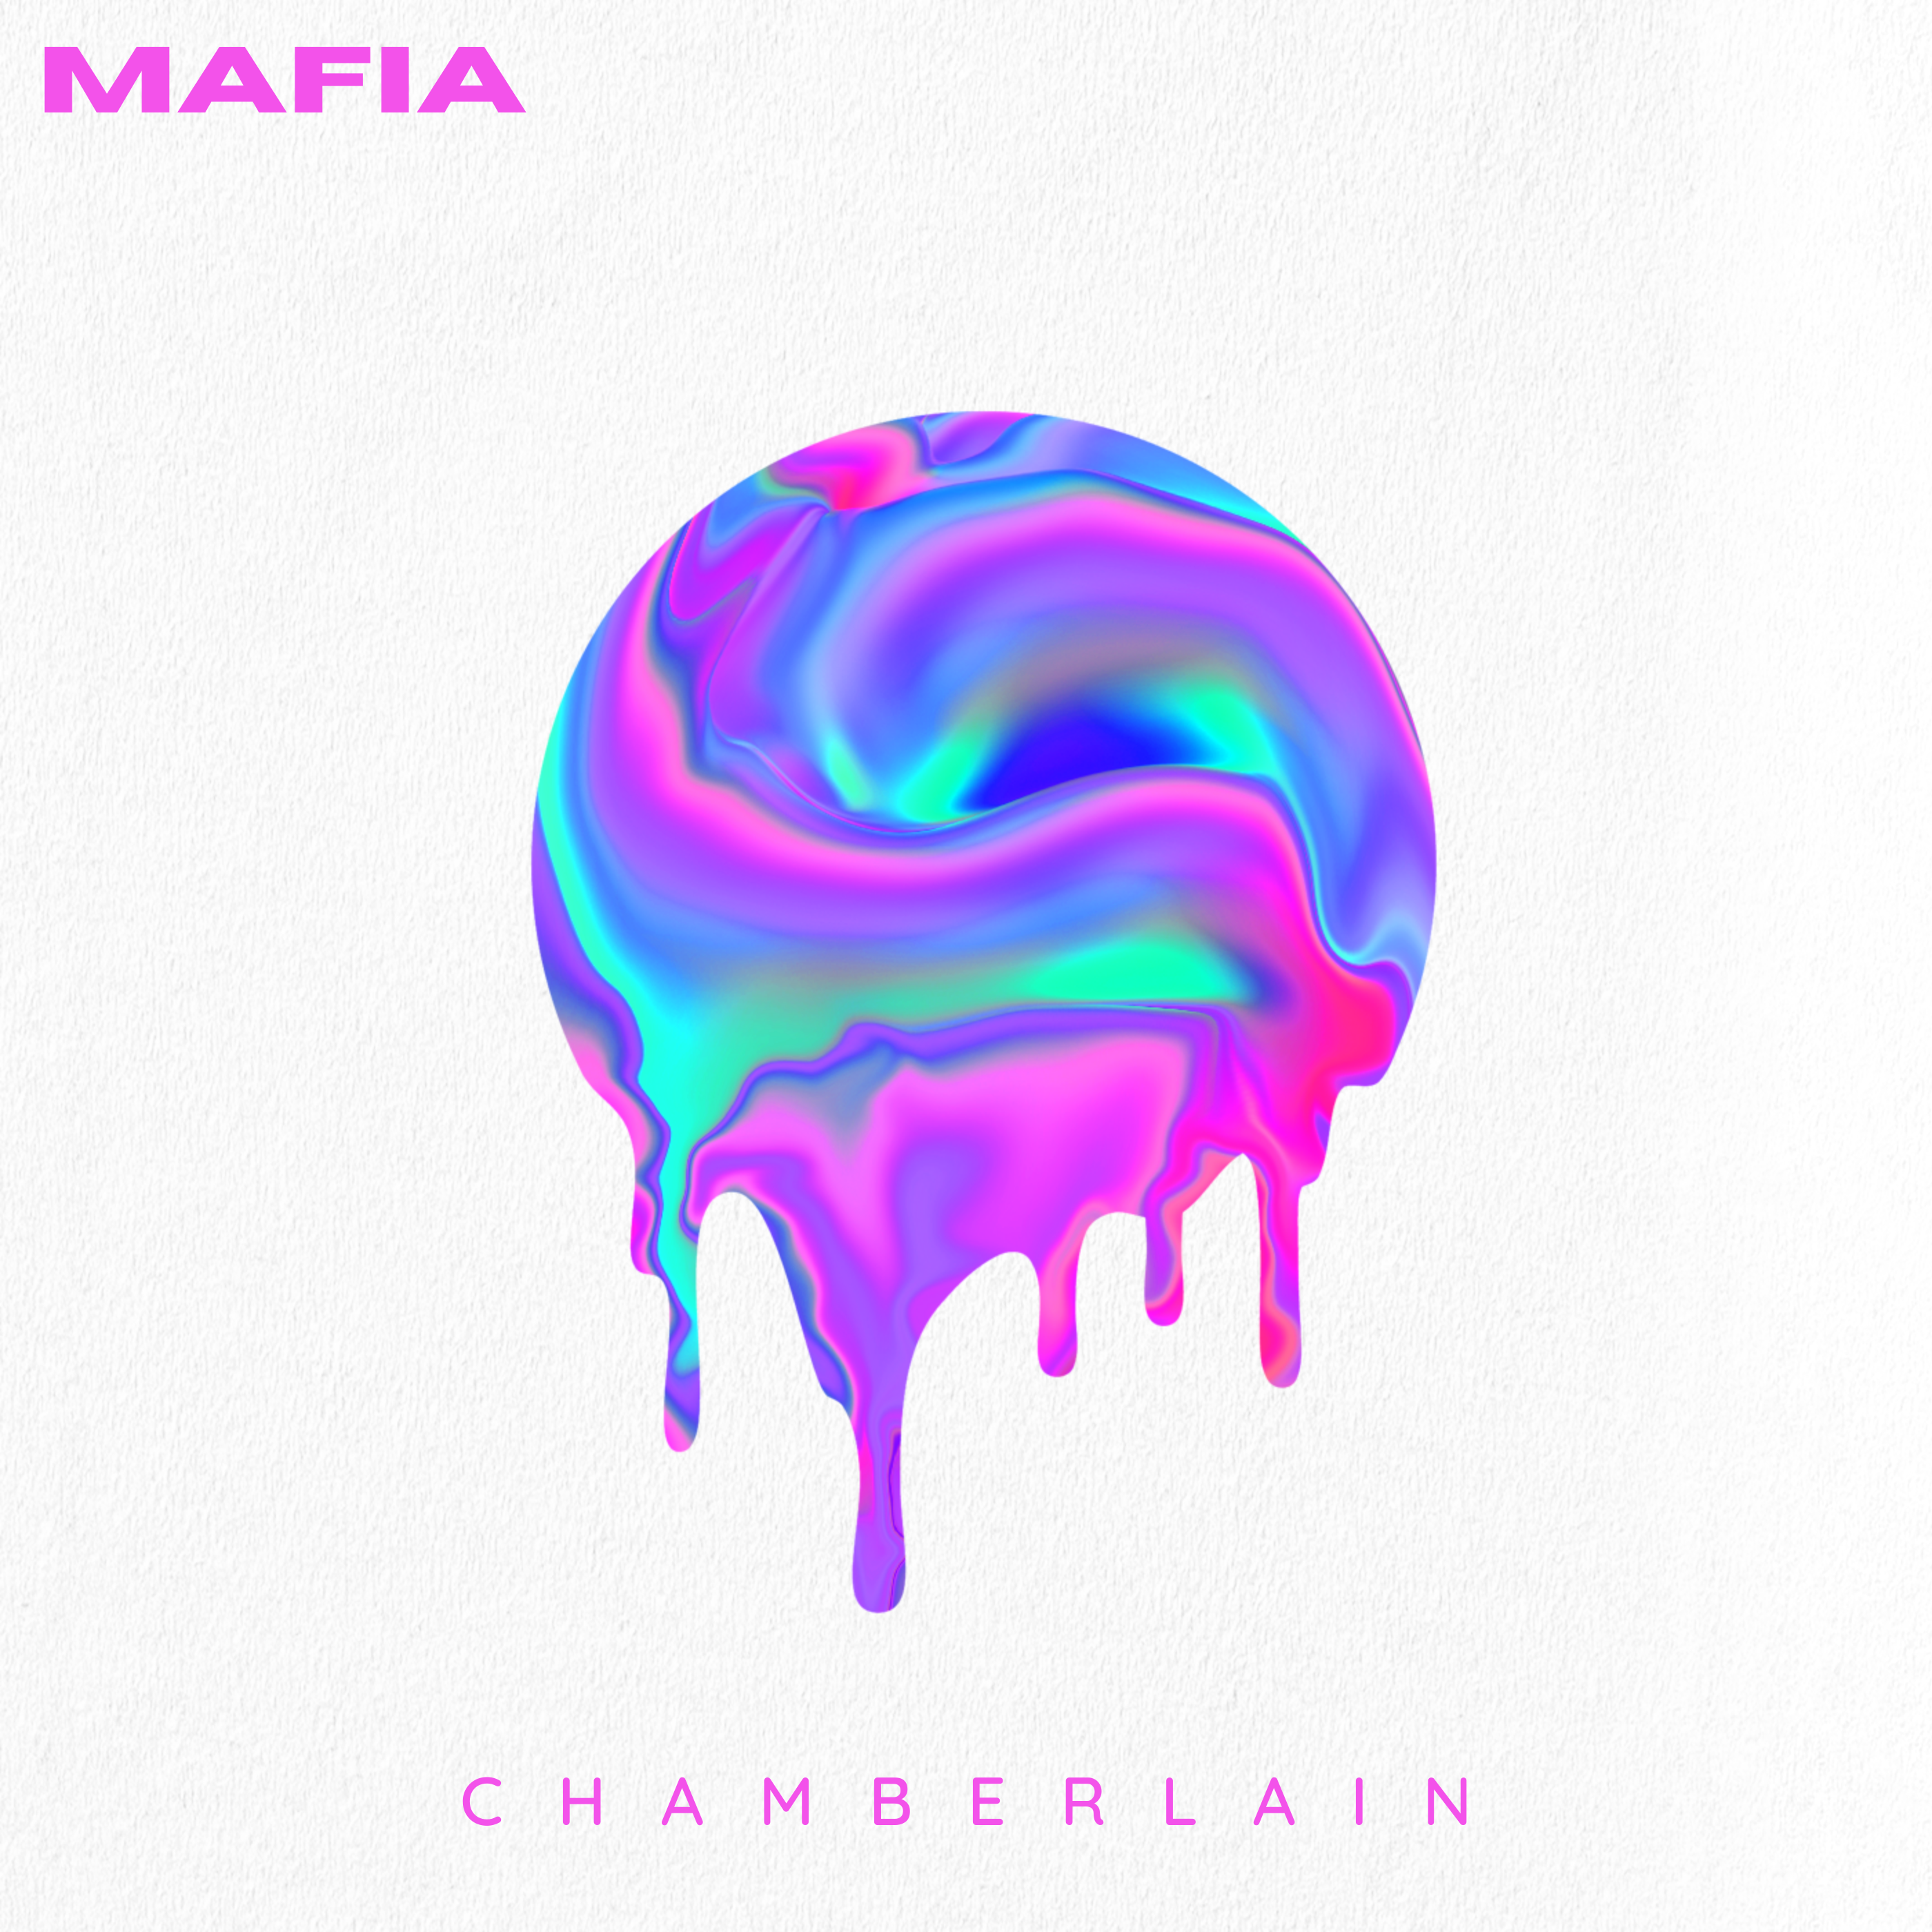 Chamberlain’s Latest Single- “Mafia”